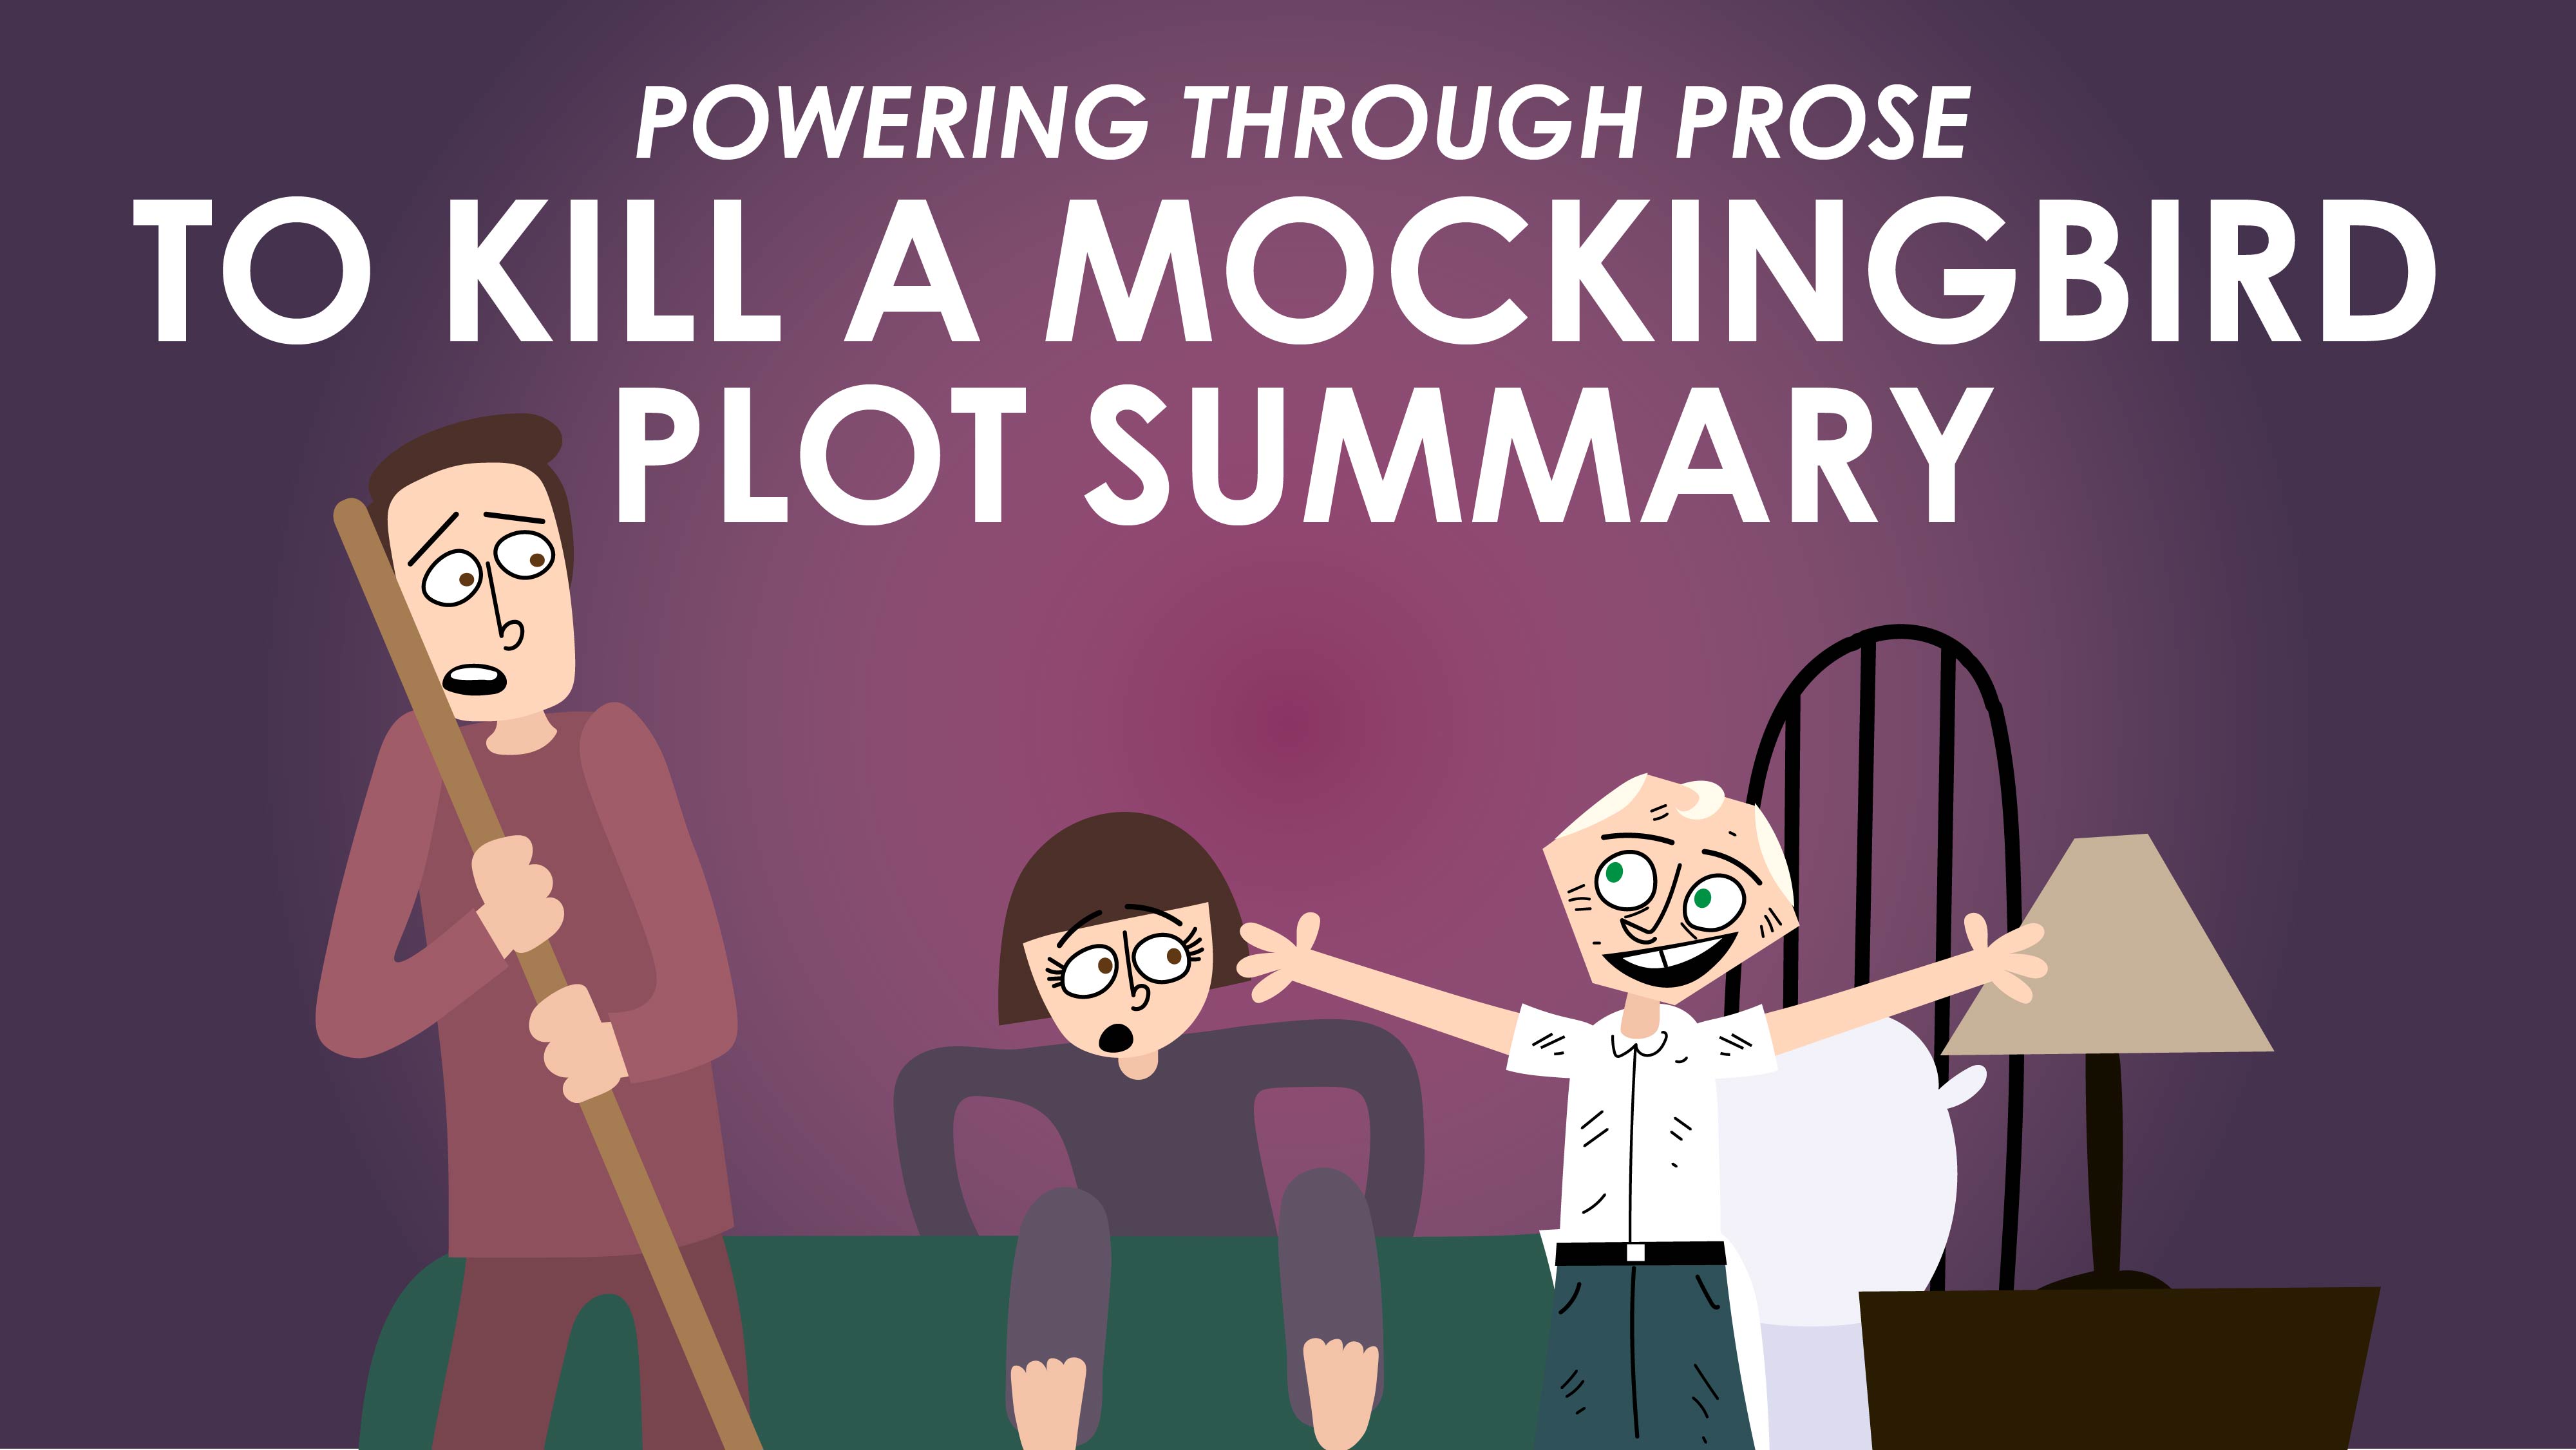 To Kill a Mockingbird - Harper Lee - Plot Summary - Powering Through Prose Series